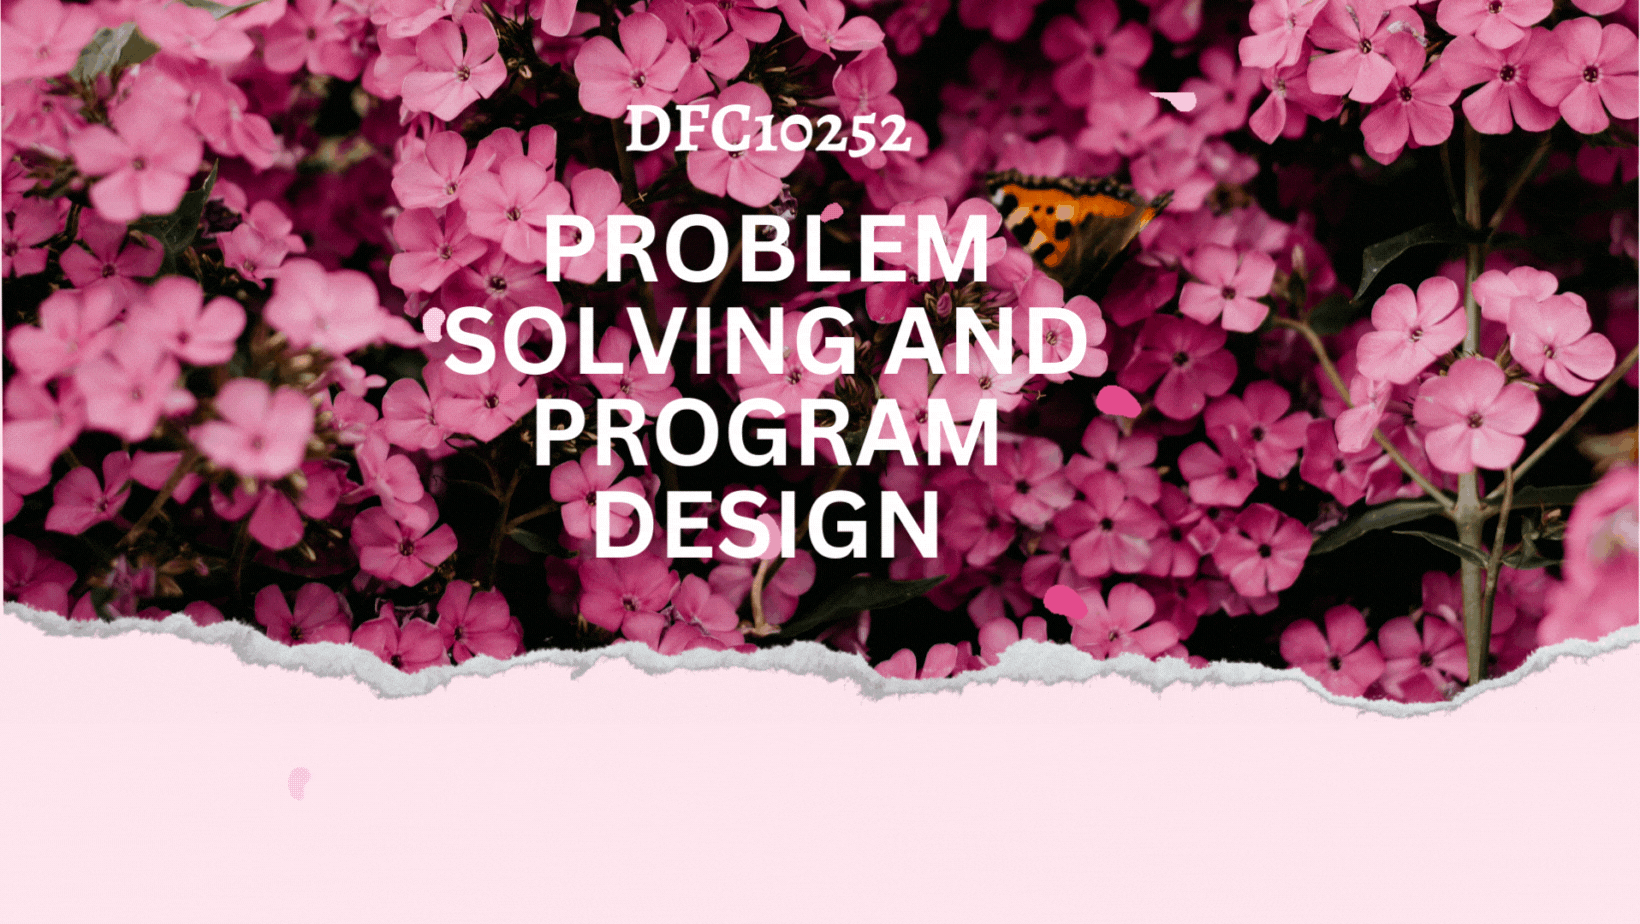 DFC10252 Problem Solving and Program Design